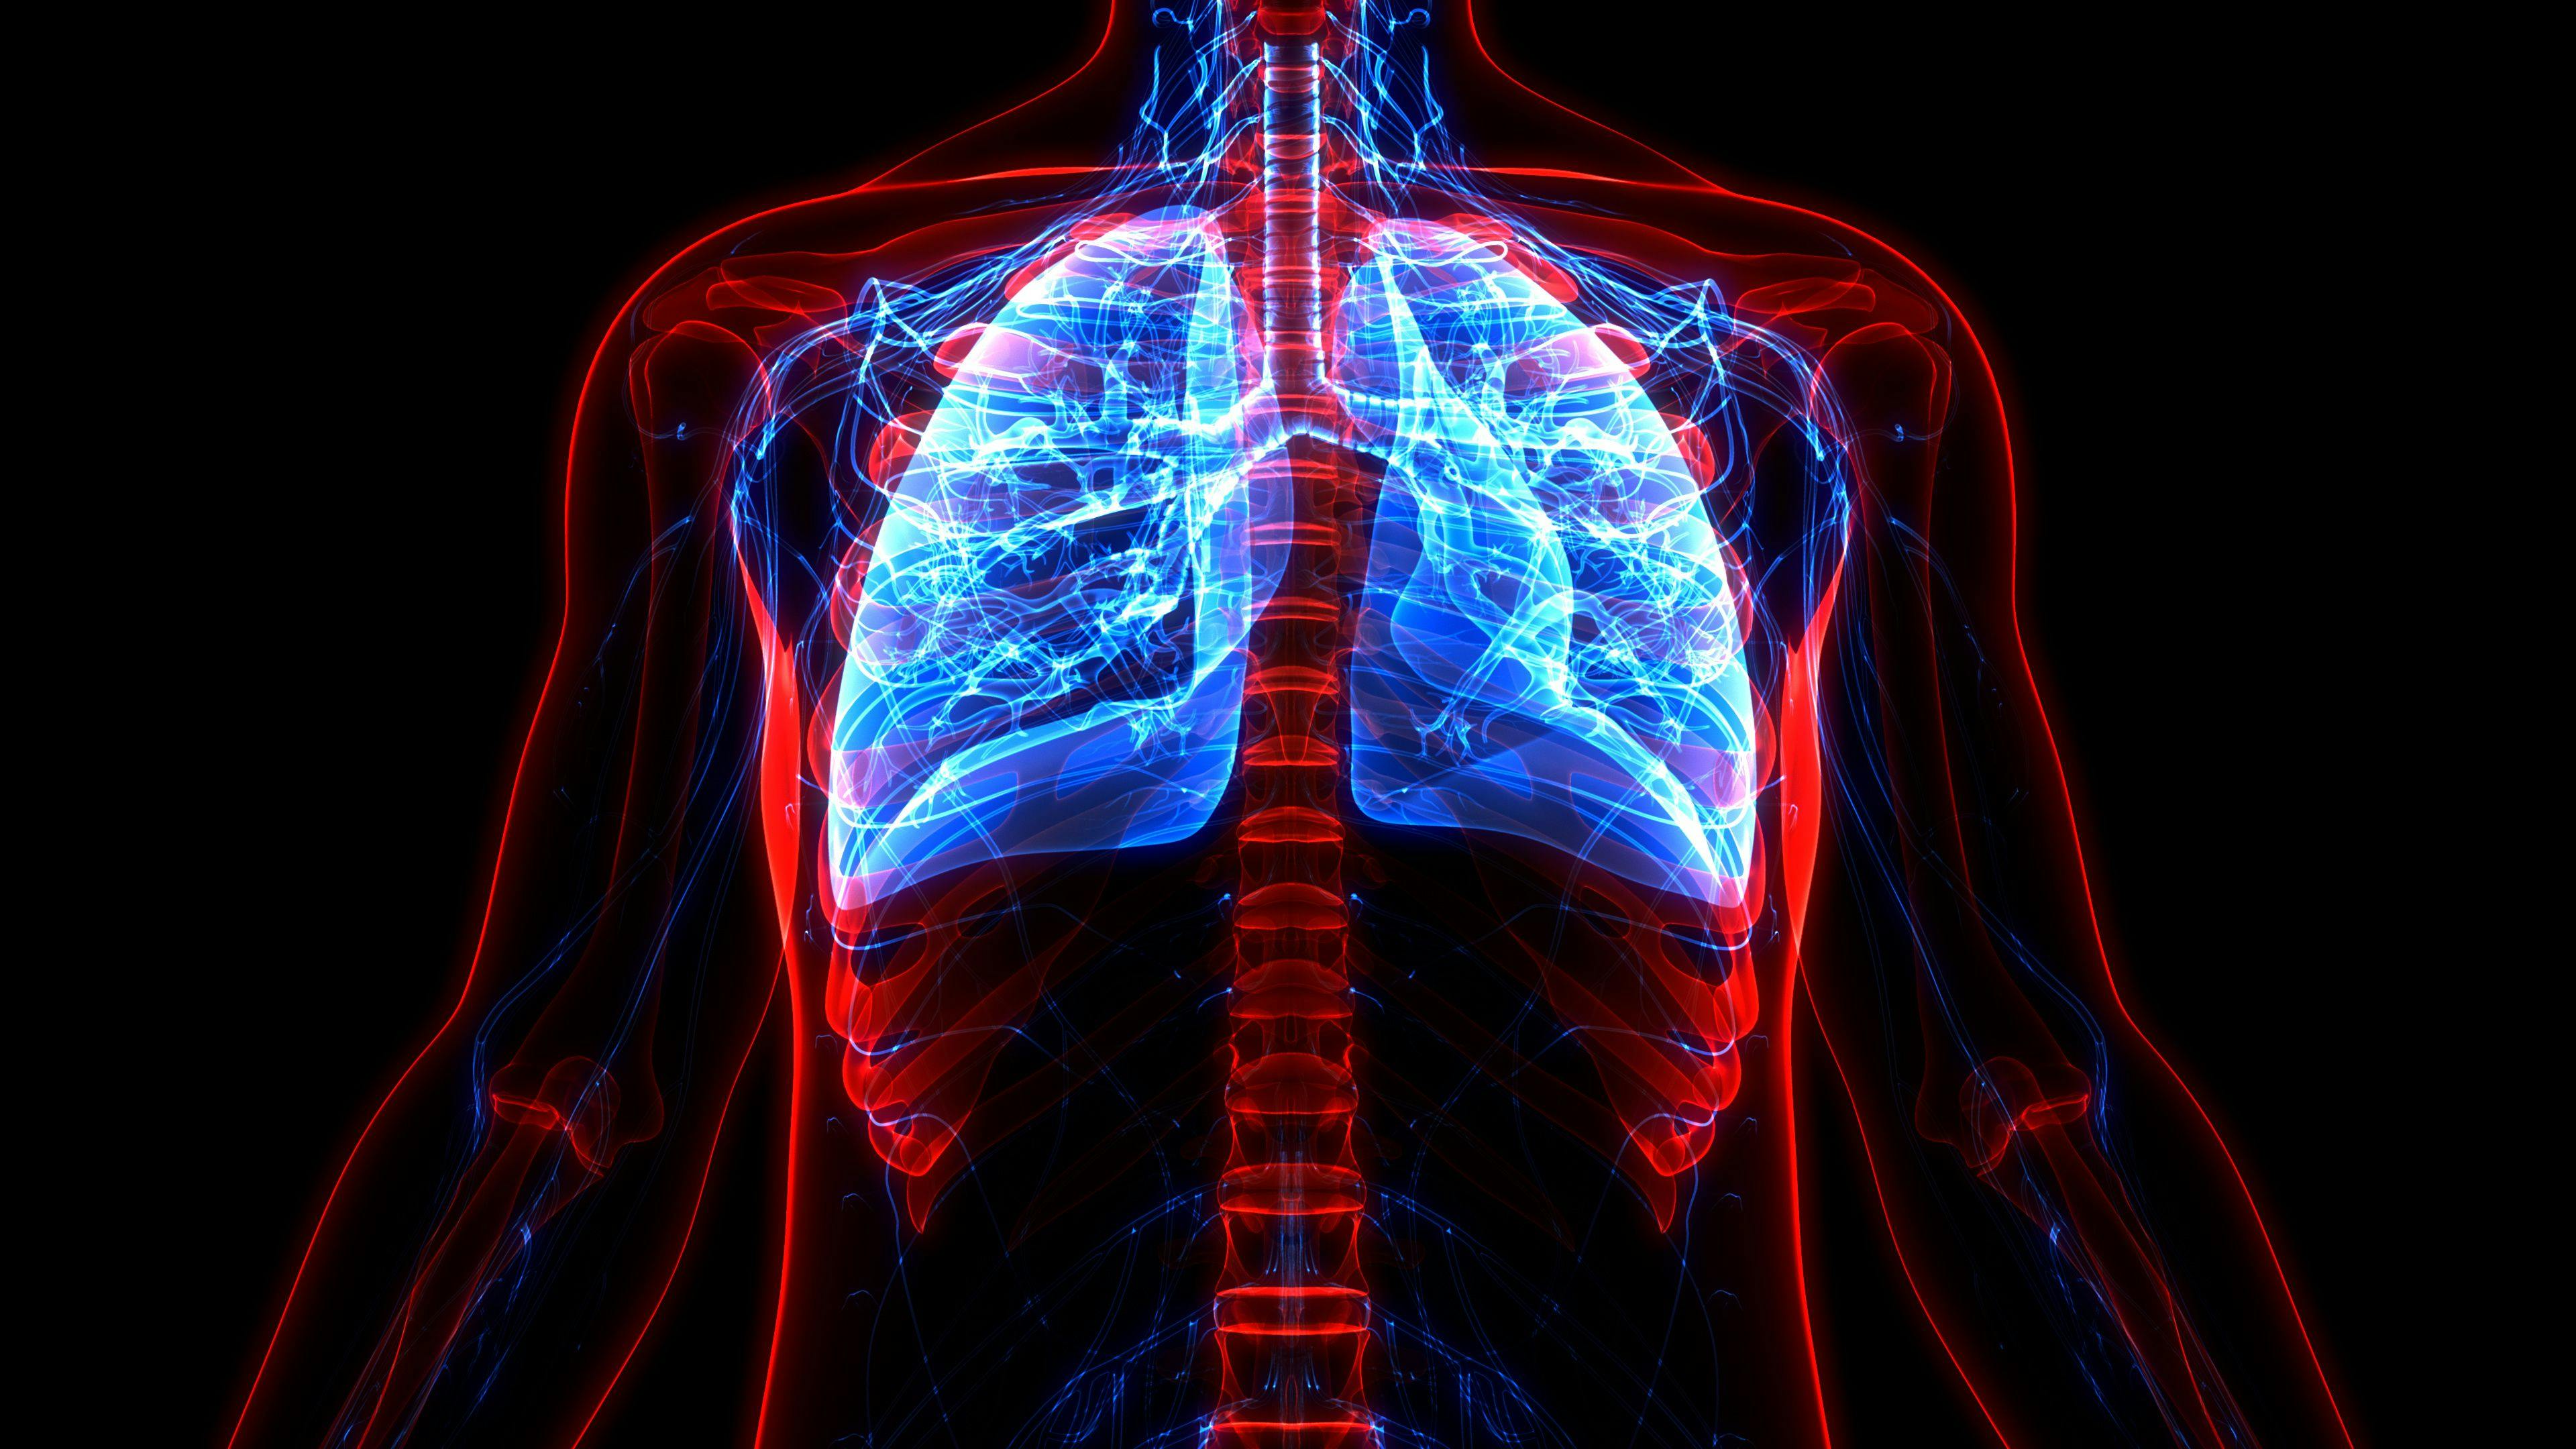 Human Respiratory System Lungs Anatomy | magicmine - stock.adobe.com